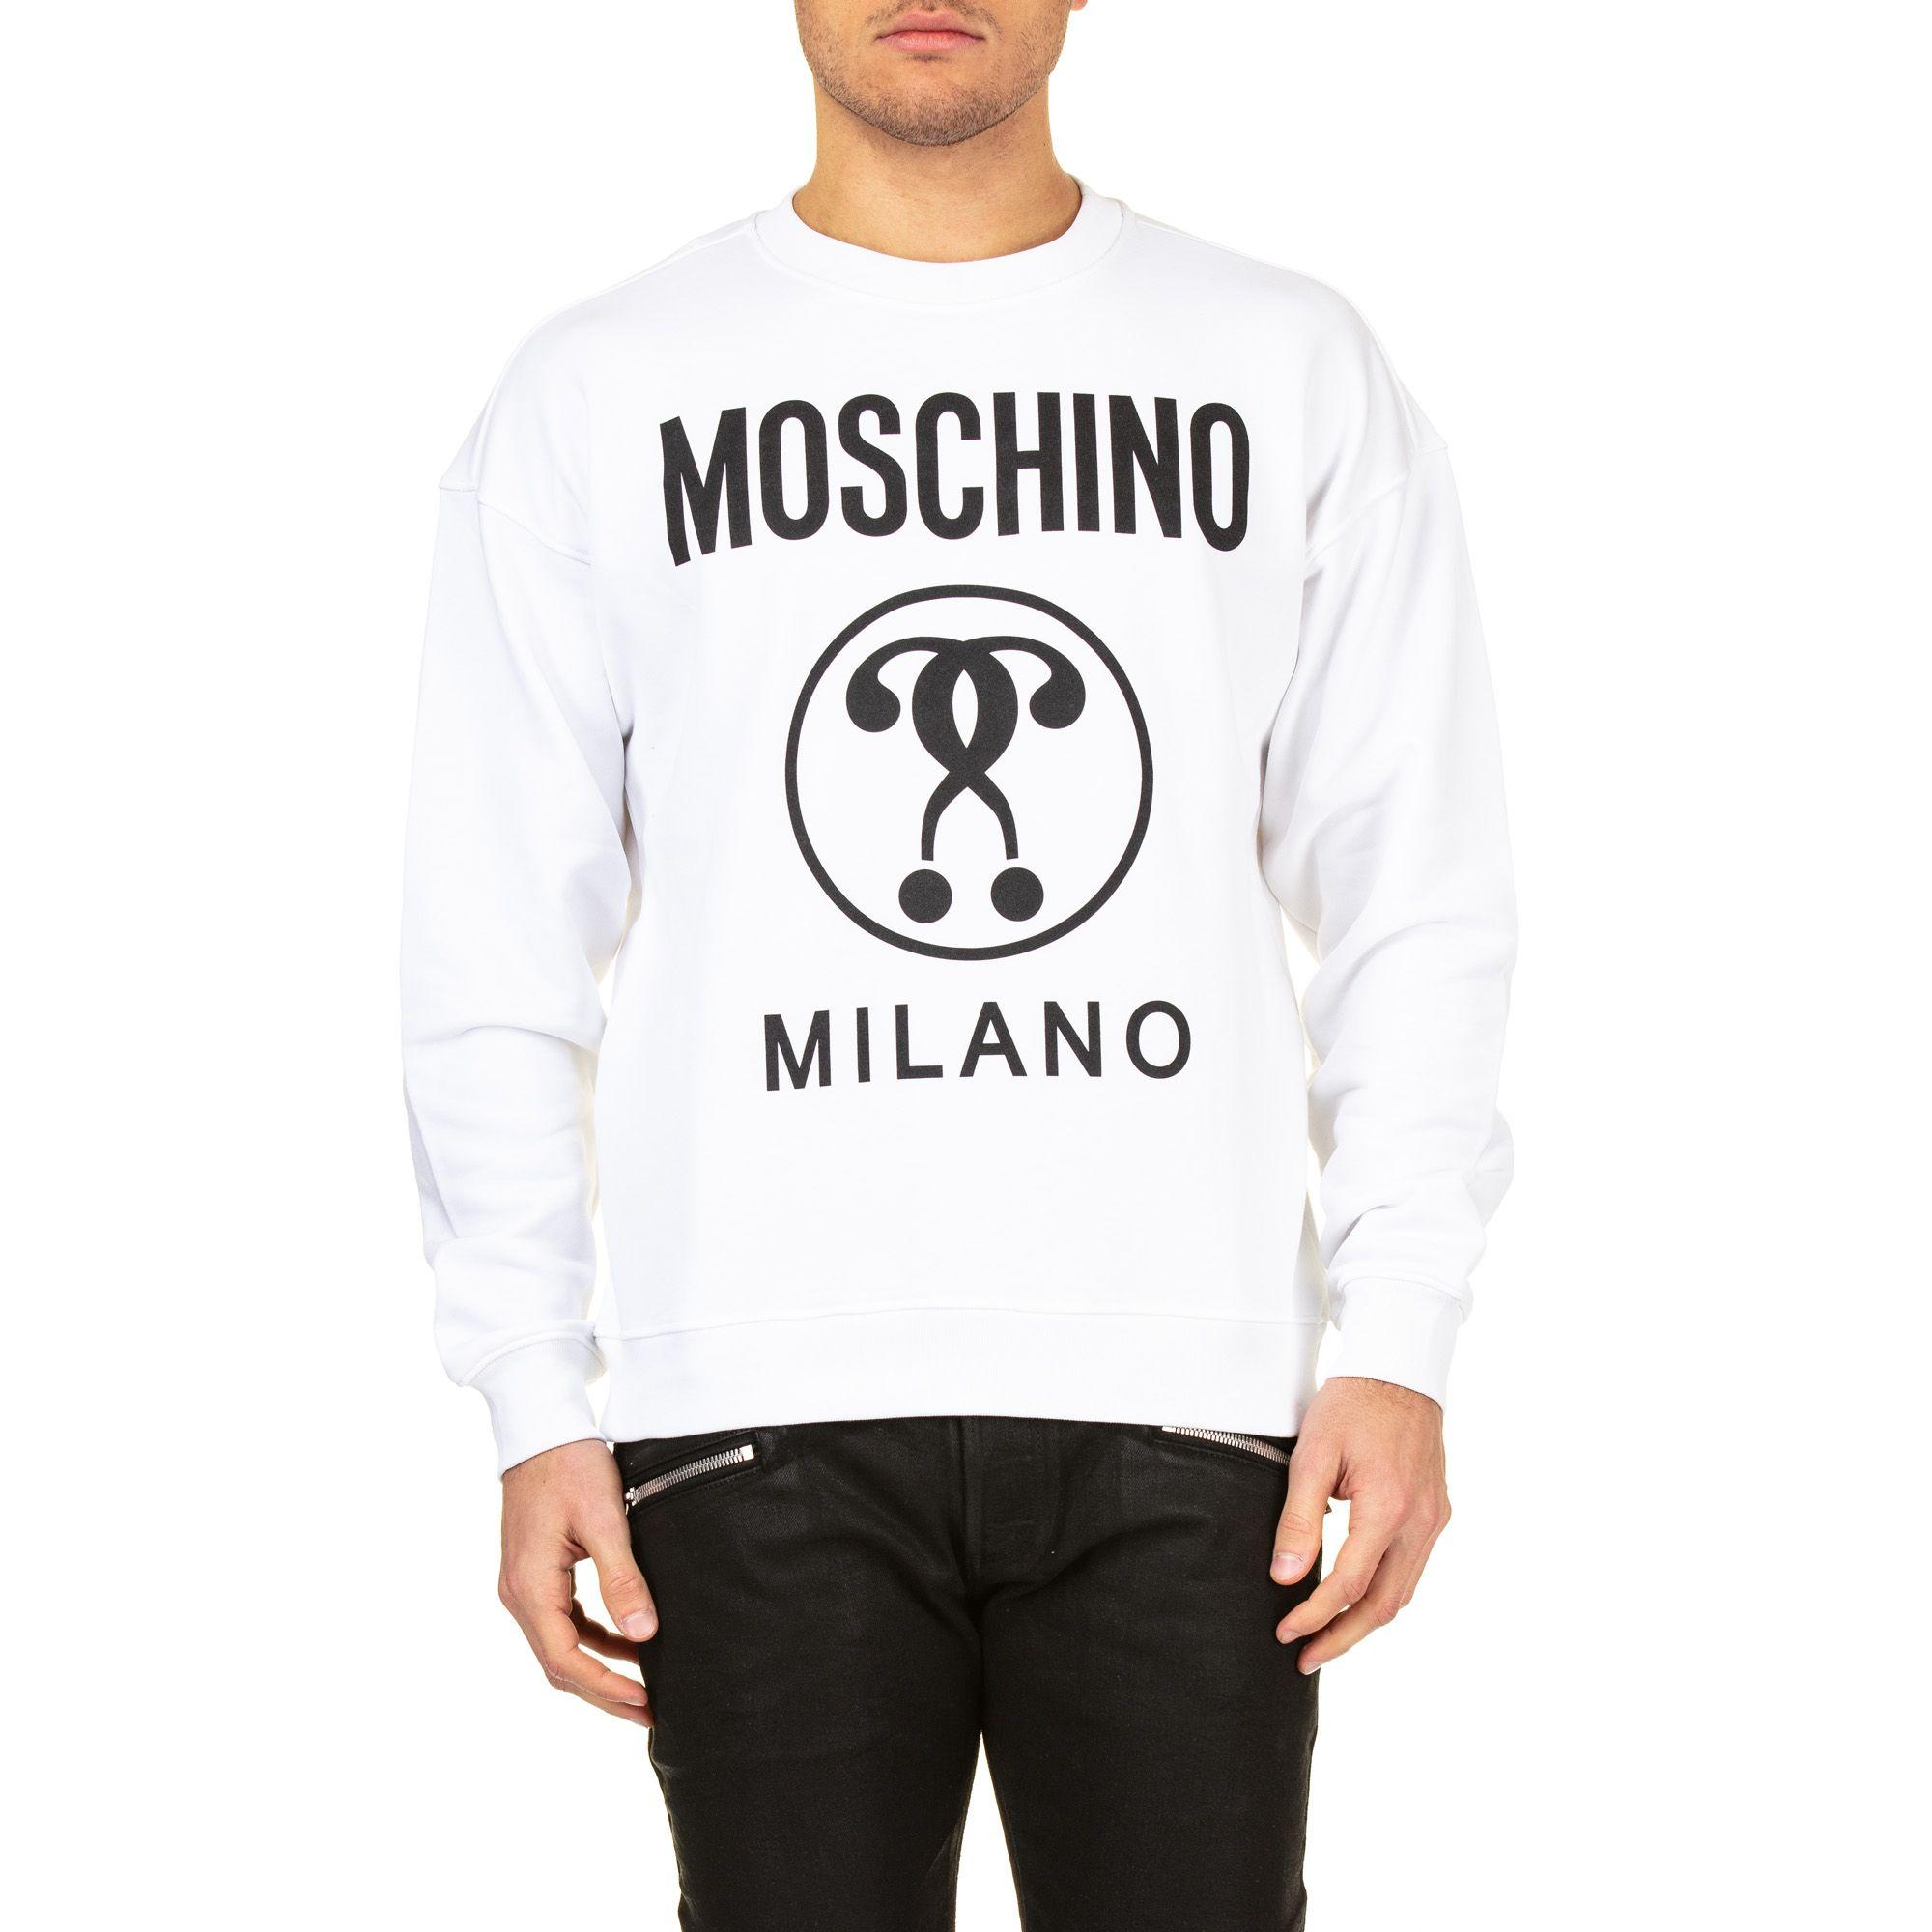 Moschino White Cotton Sweatshirt in White for Men - Save 12% - Lyst